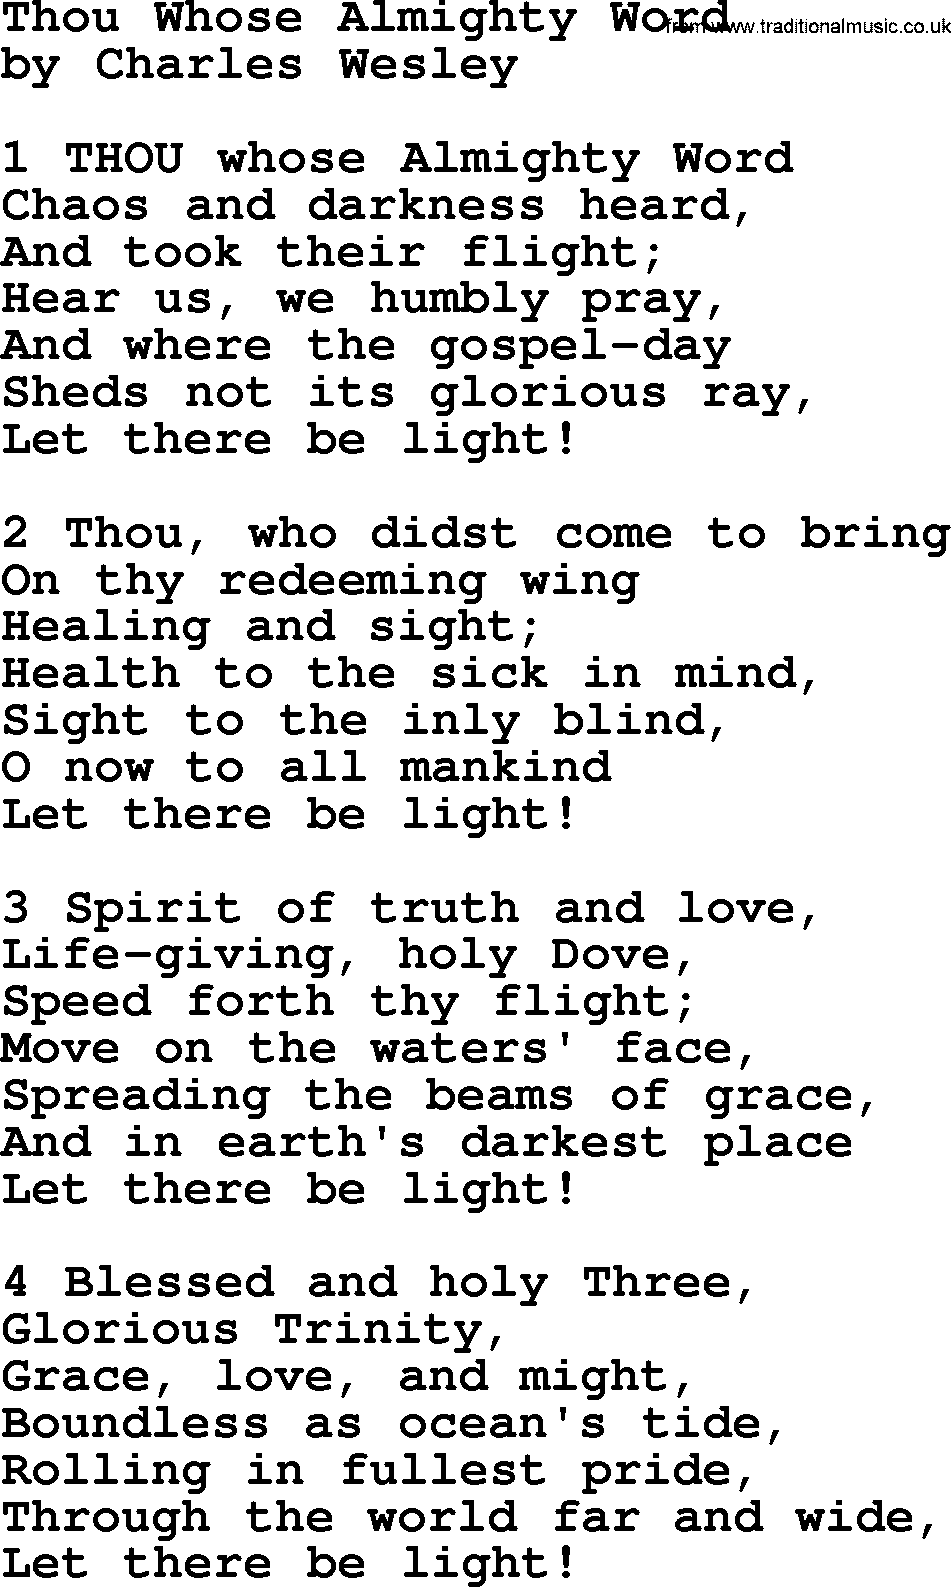 Charles Wesley hymn: Thou Whose Almighty Word, lyrics